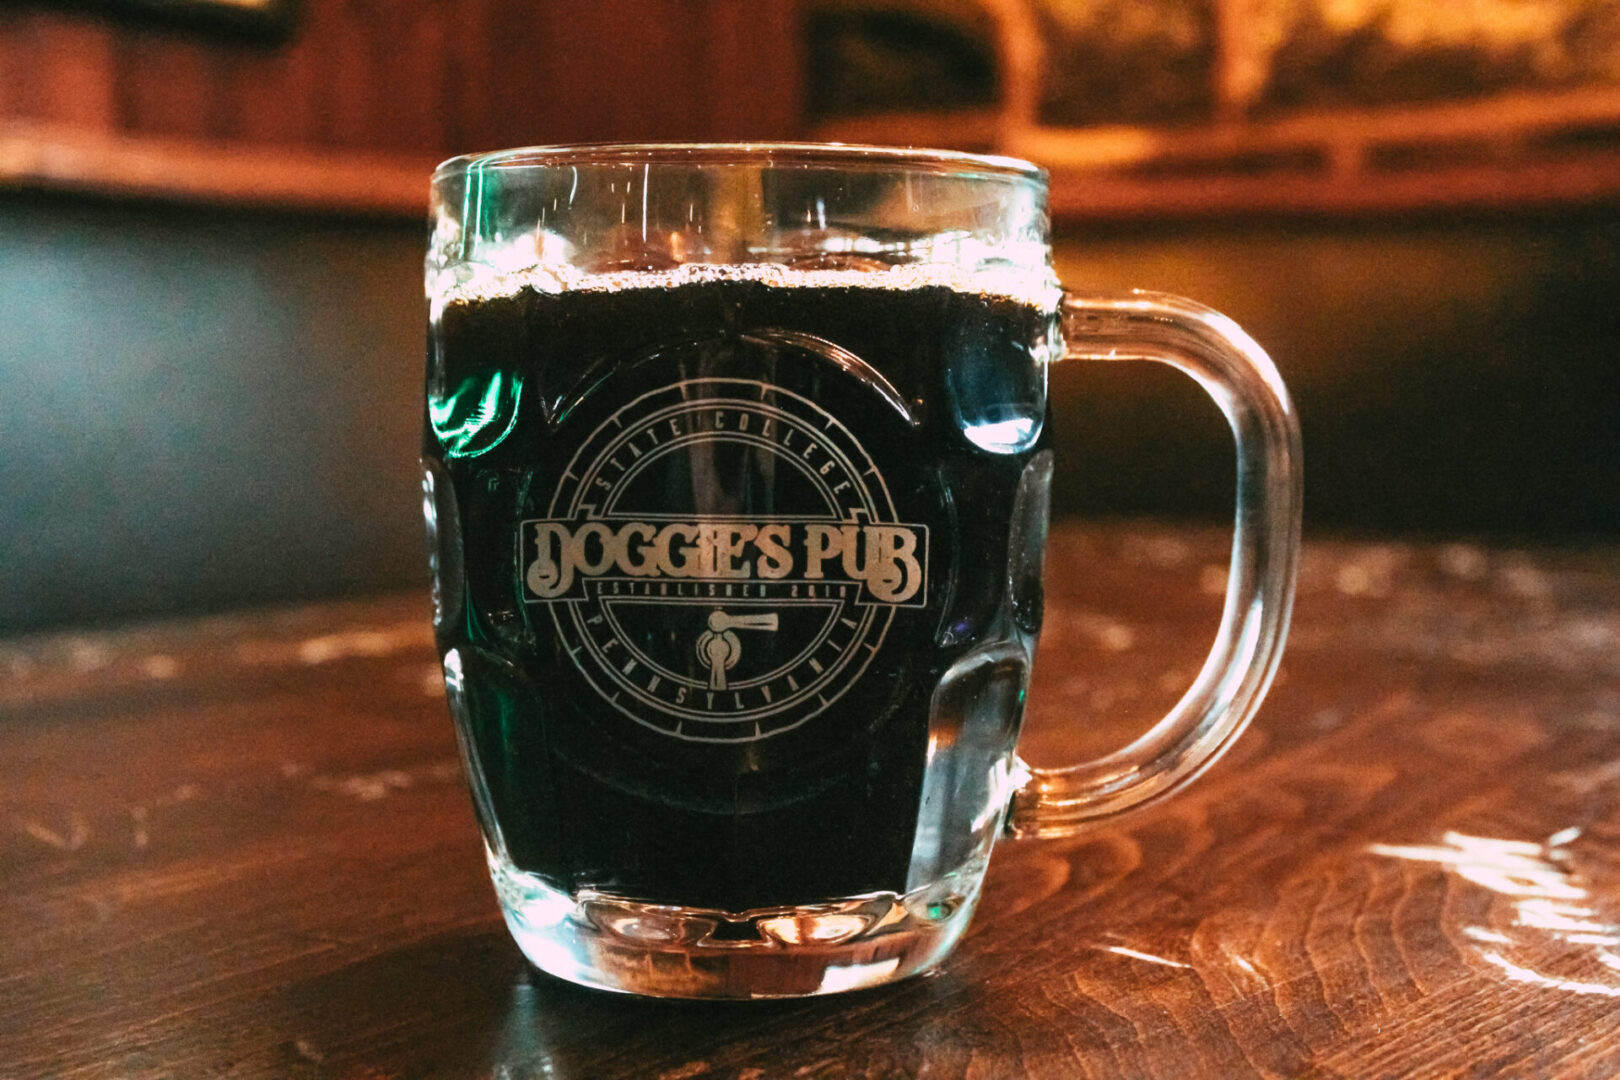 A Glass Mug With Beverage and Doggies Pub Printed